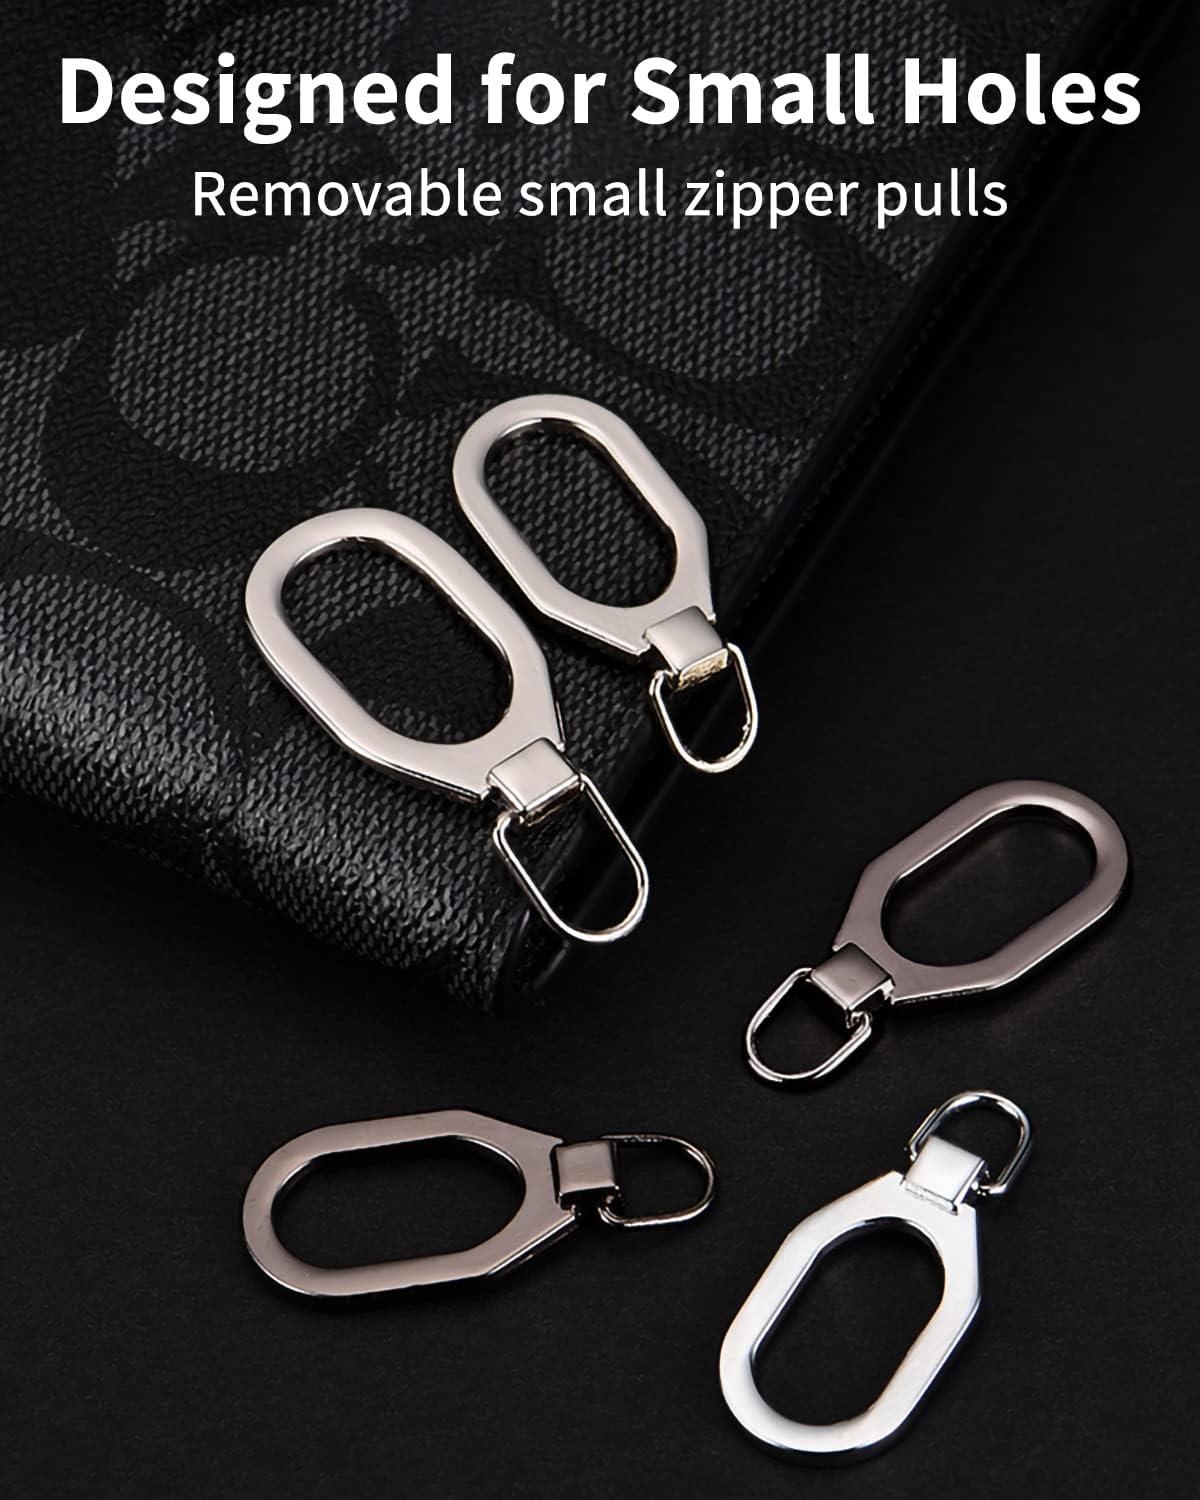 Custom Designed Polished Metal Zipper Pulls - Zipper Pulls